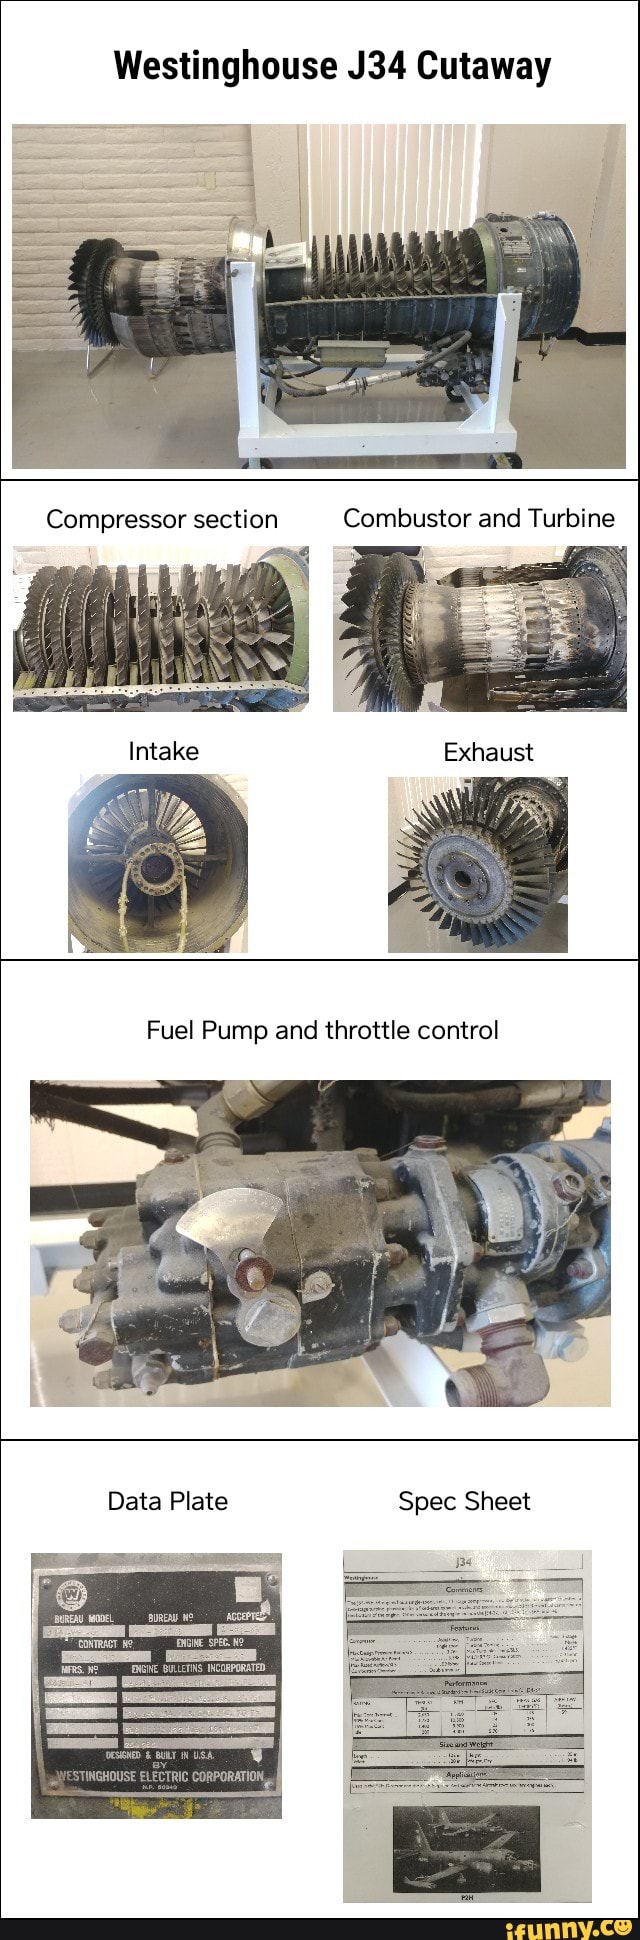 westinghouse j34 turbine engine